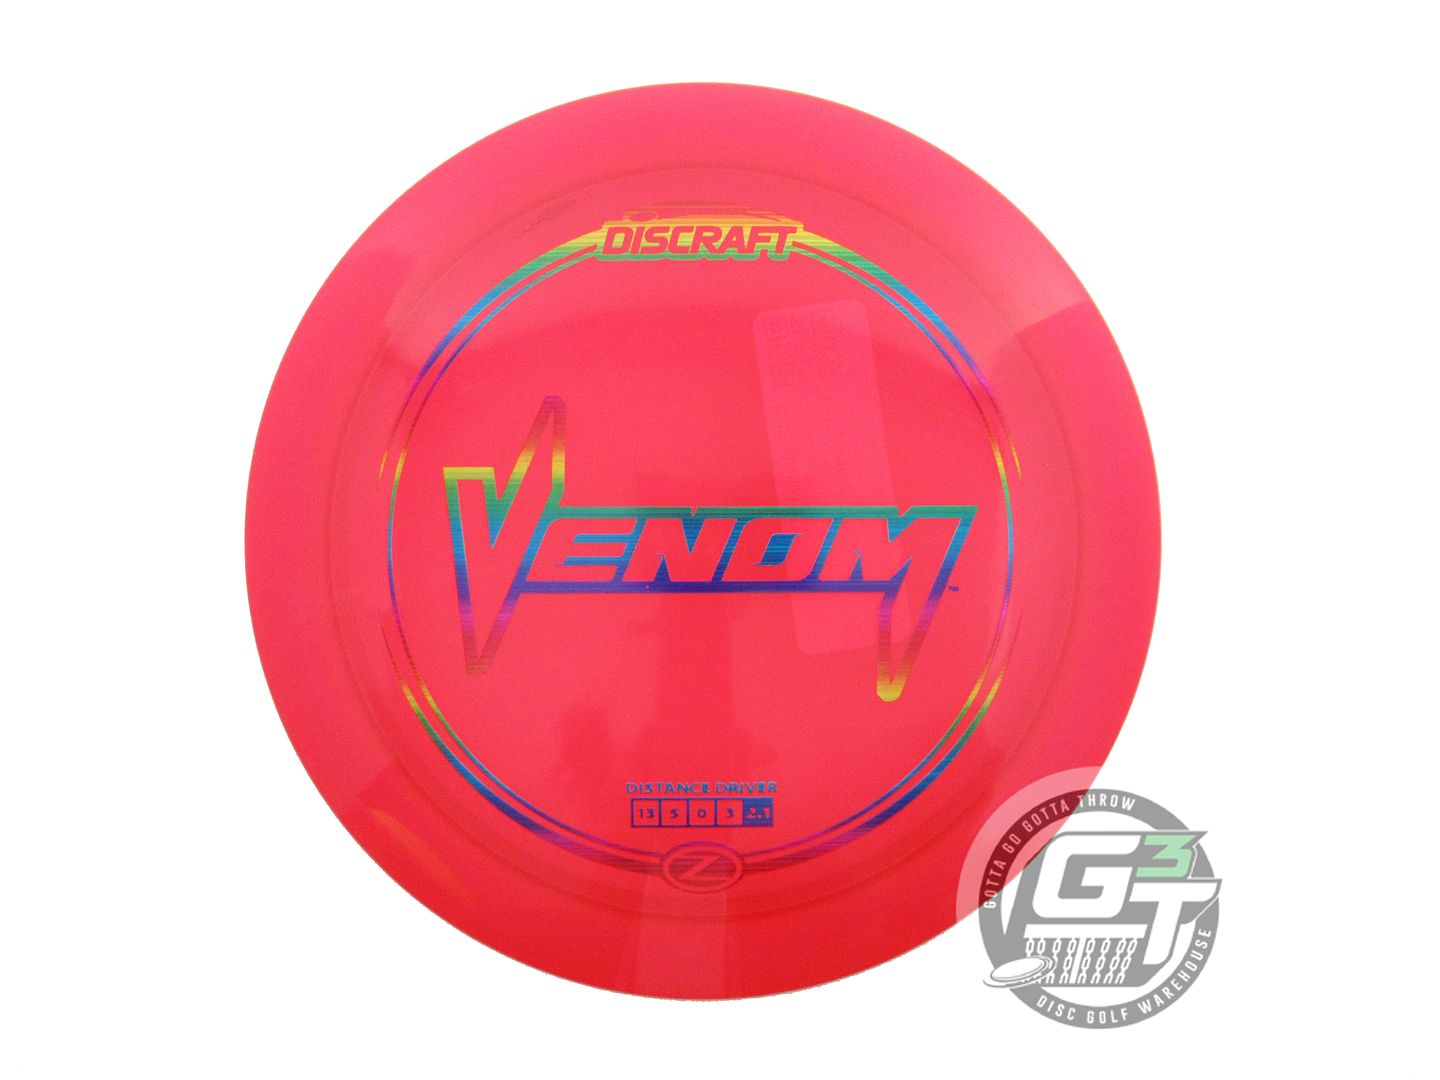 Discraft Elite Z Venom Distance Driver Golf Disc (Individually Listed)